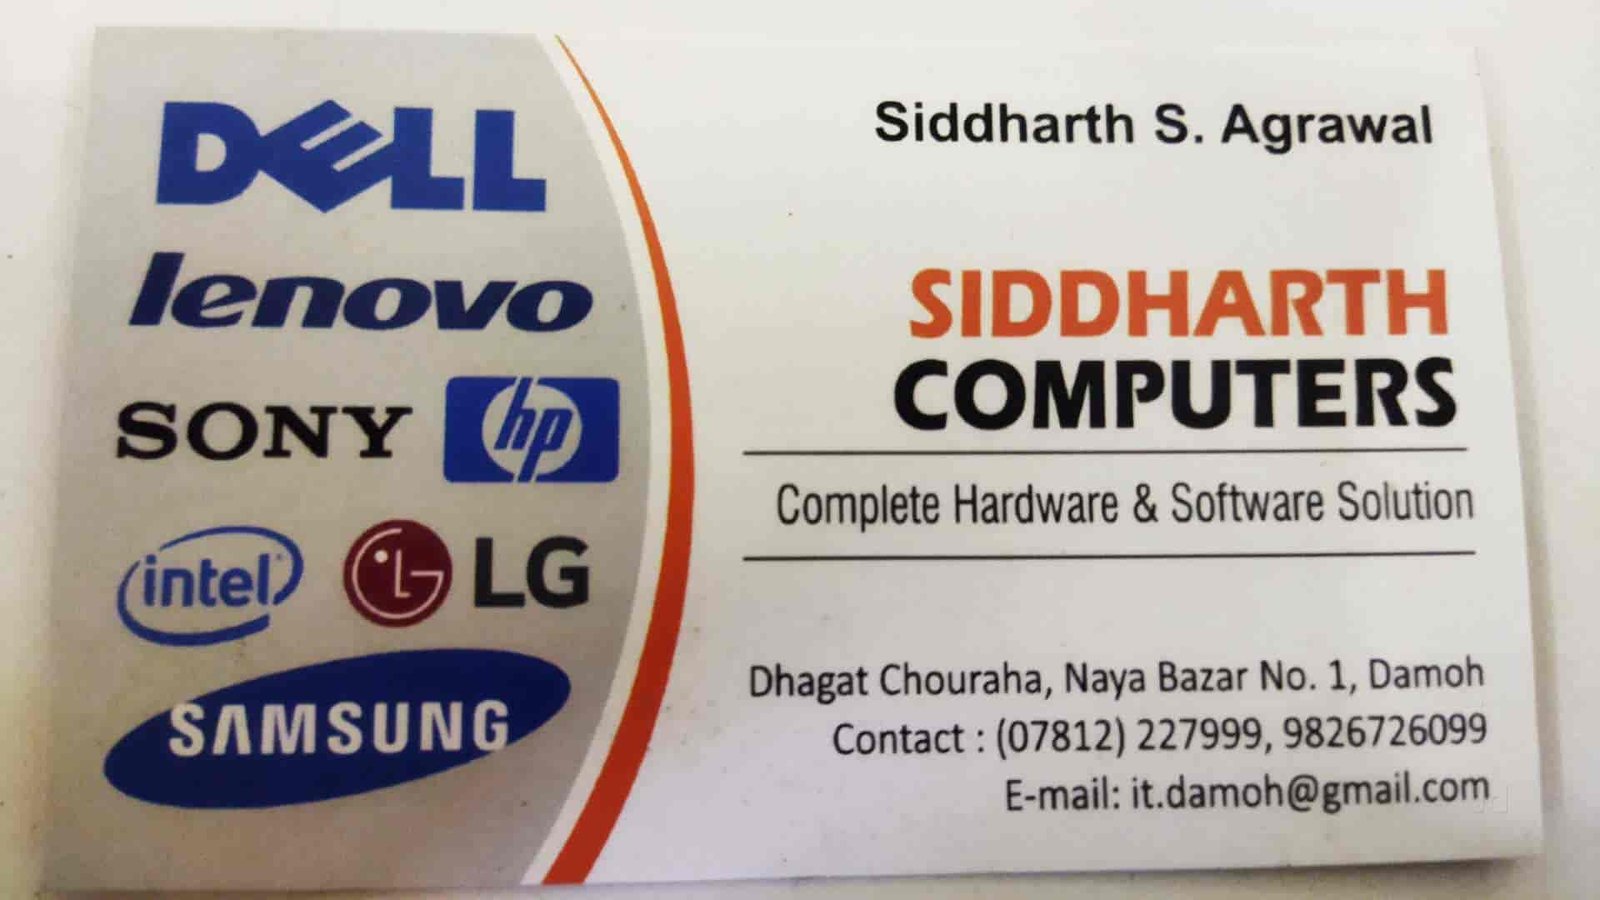 Siddharth Computers